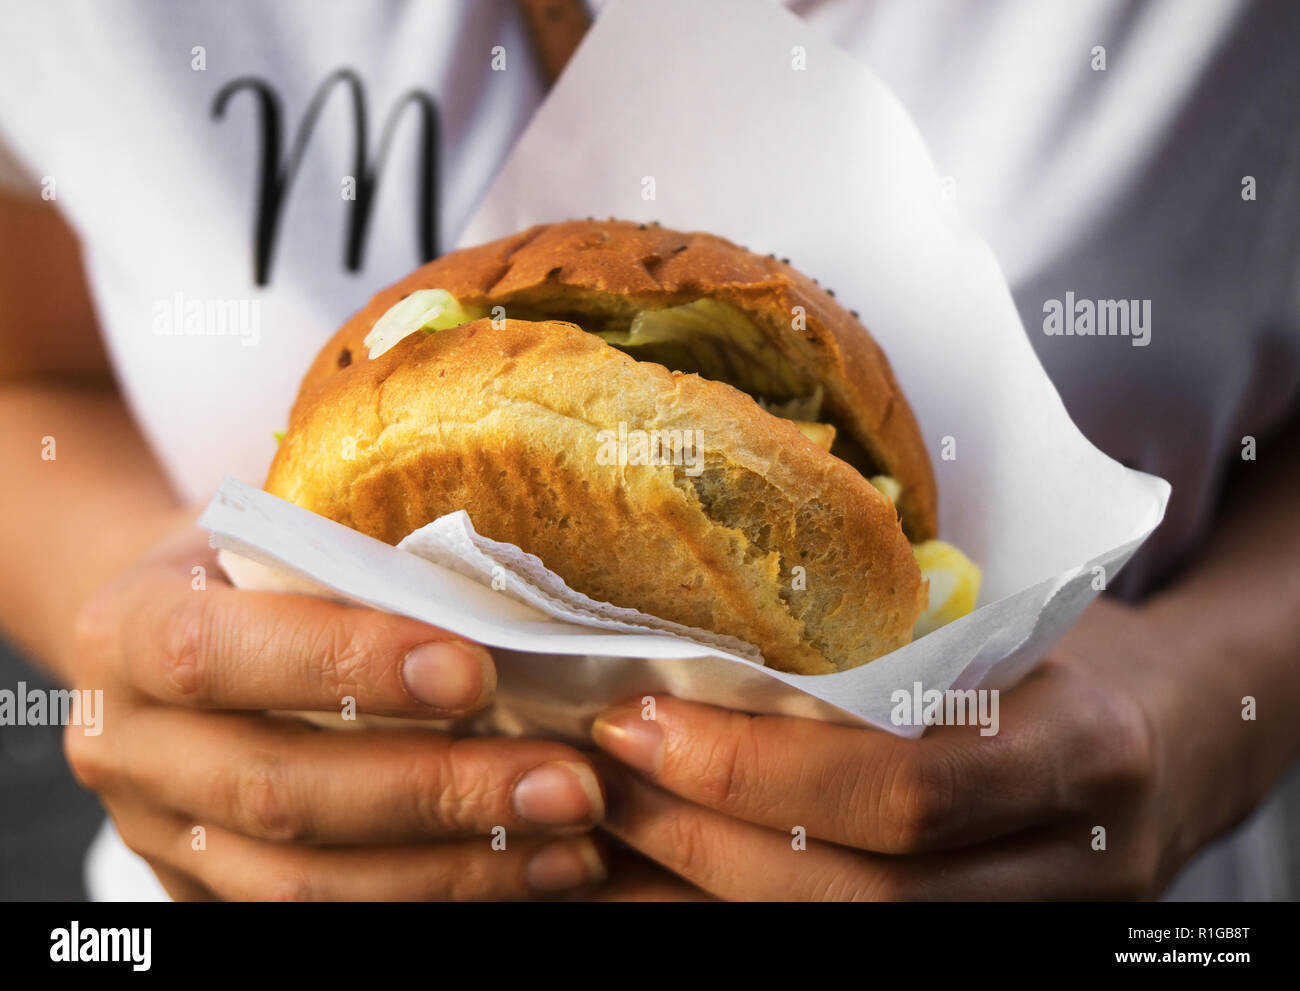 Woman hands holding a hamburger. Stock Photo